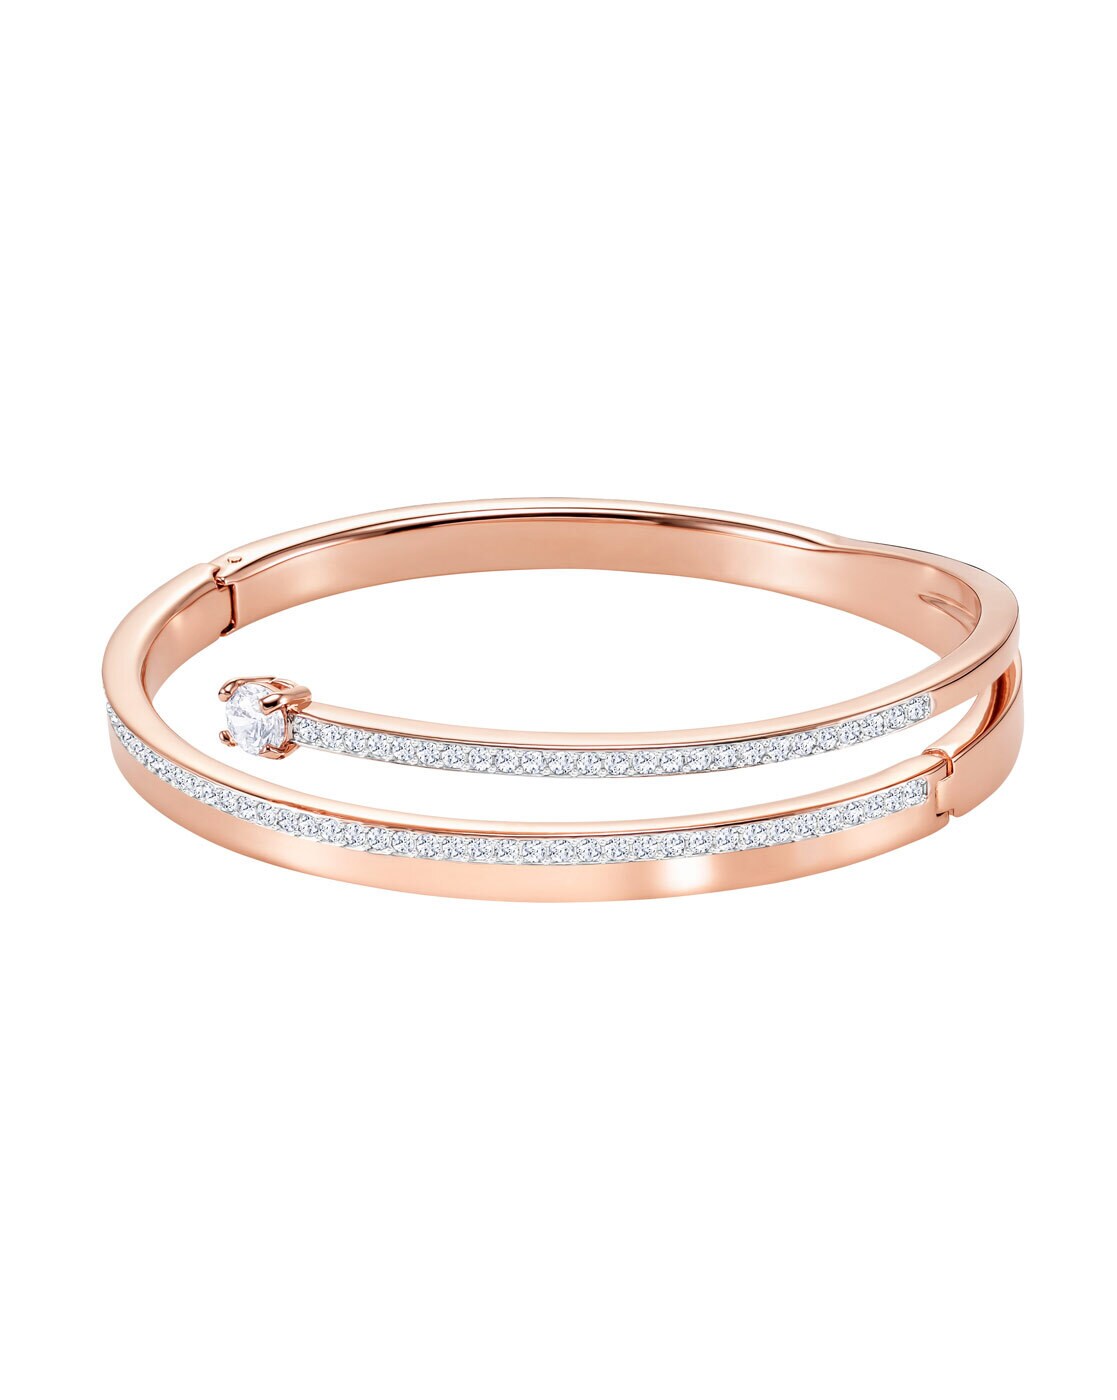 Buy 18K Gold Dipped Silver Mangalsutra Bracelet With Swarovski Diamonds  Online at Jayporecom